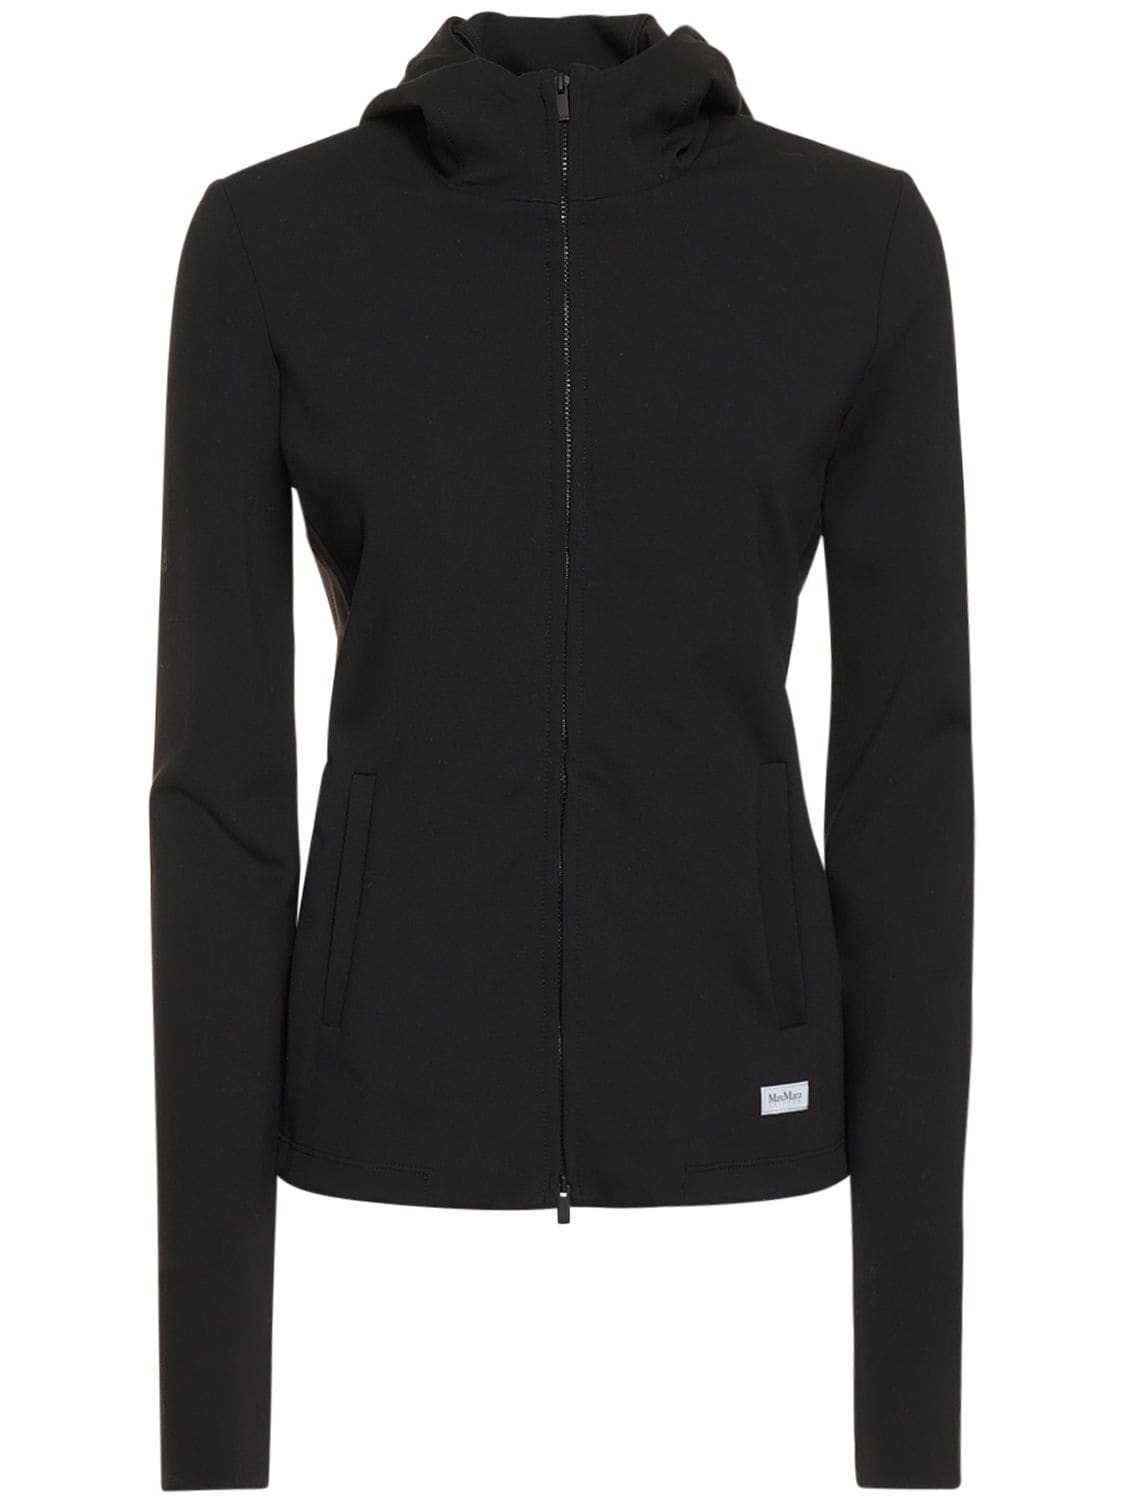 MAX MARA Gessati Stretch Tech Zip Sweatshirt in black